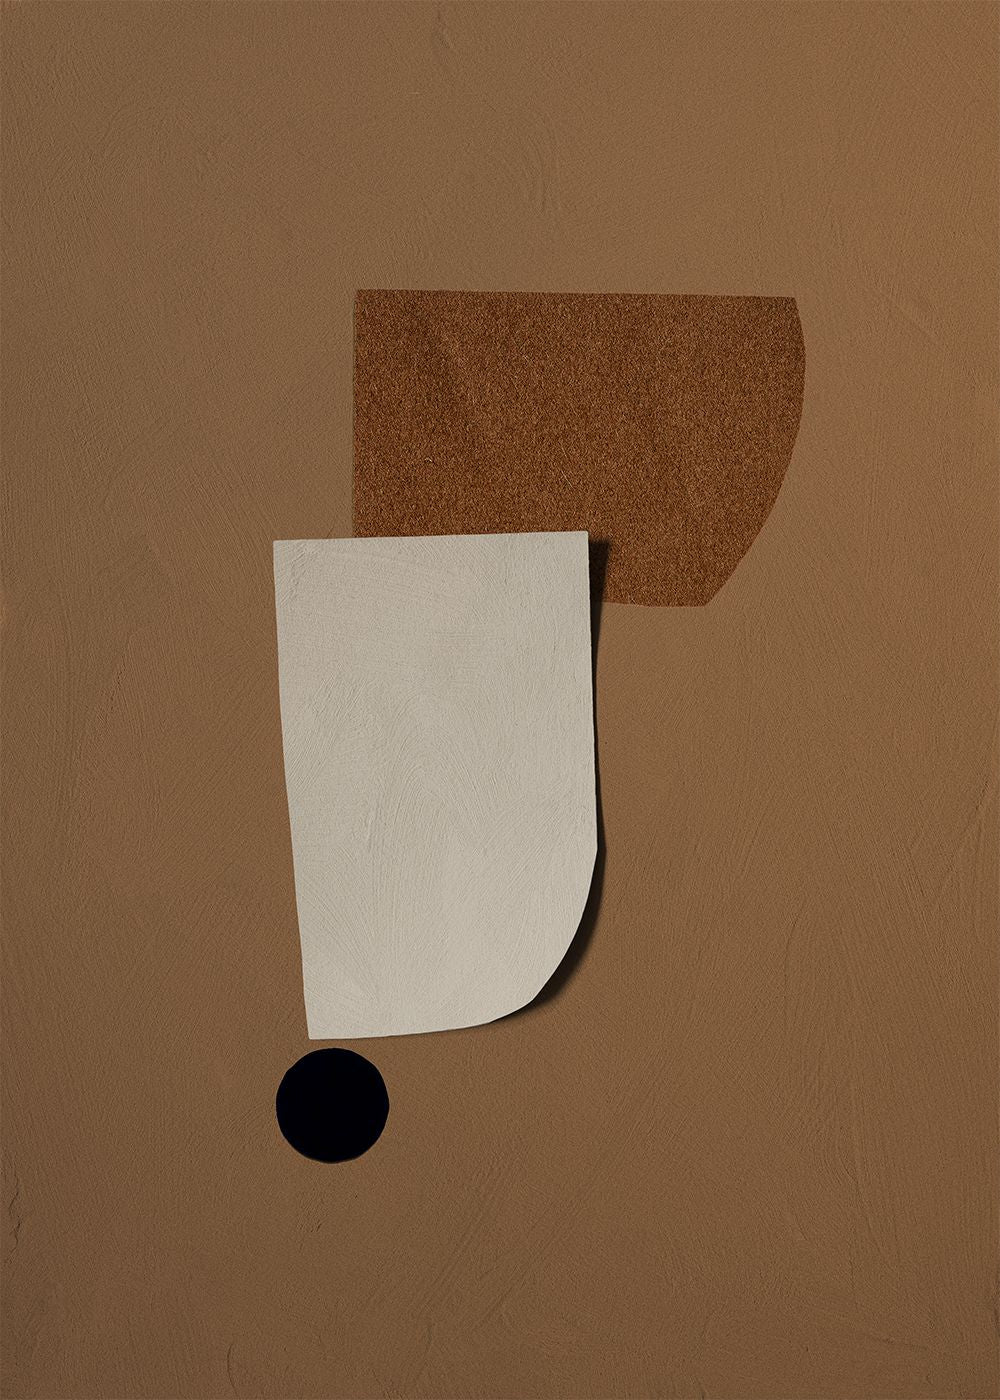 Paper Collective Tippepunkt 02 plakat, 70x100 cm